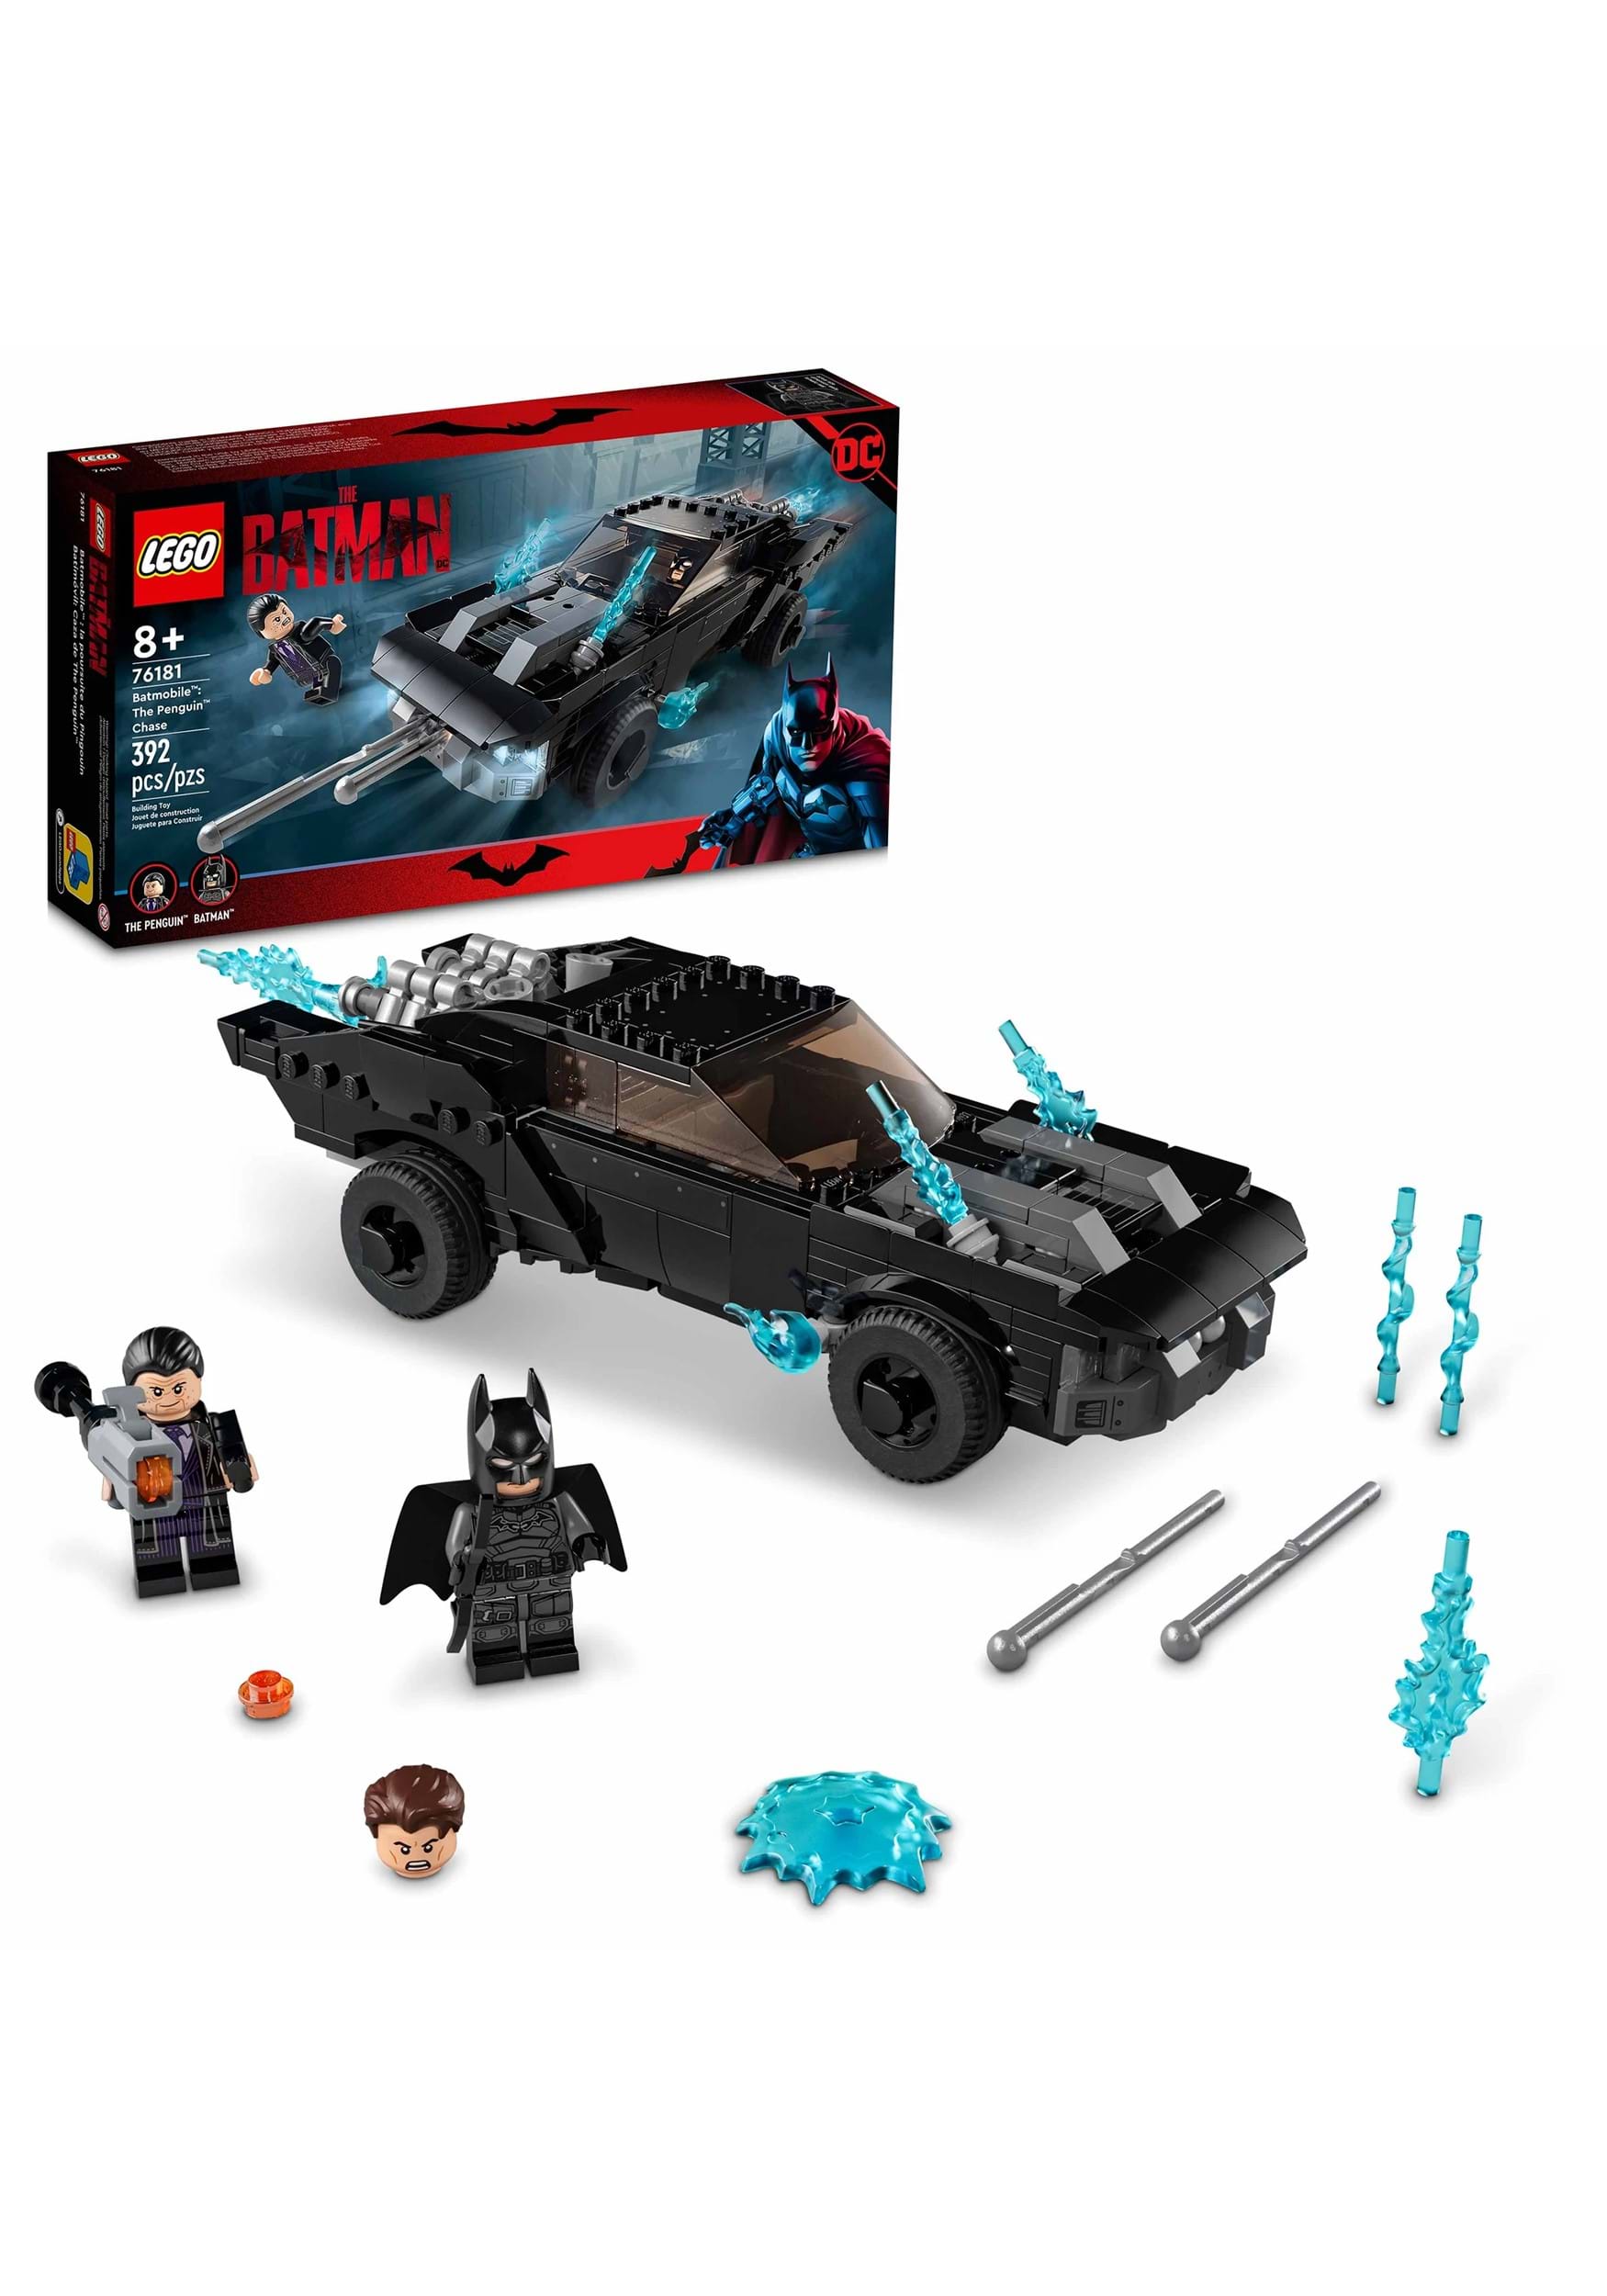 LEGO The Batman Batmobile: The Penguin Chase Building Kit